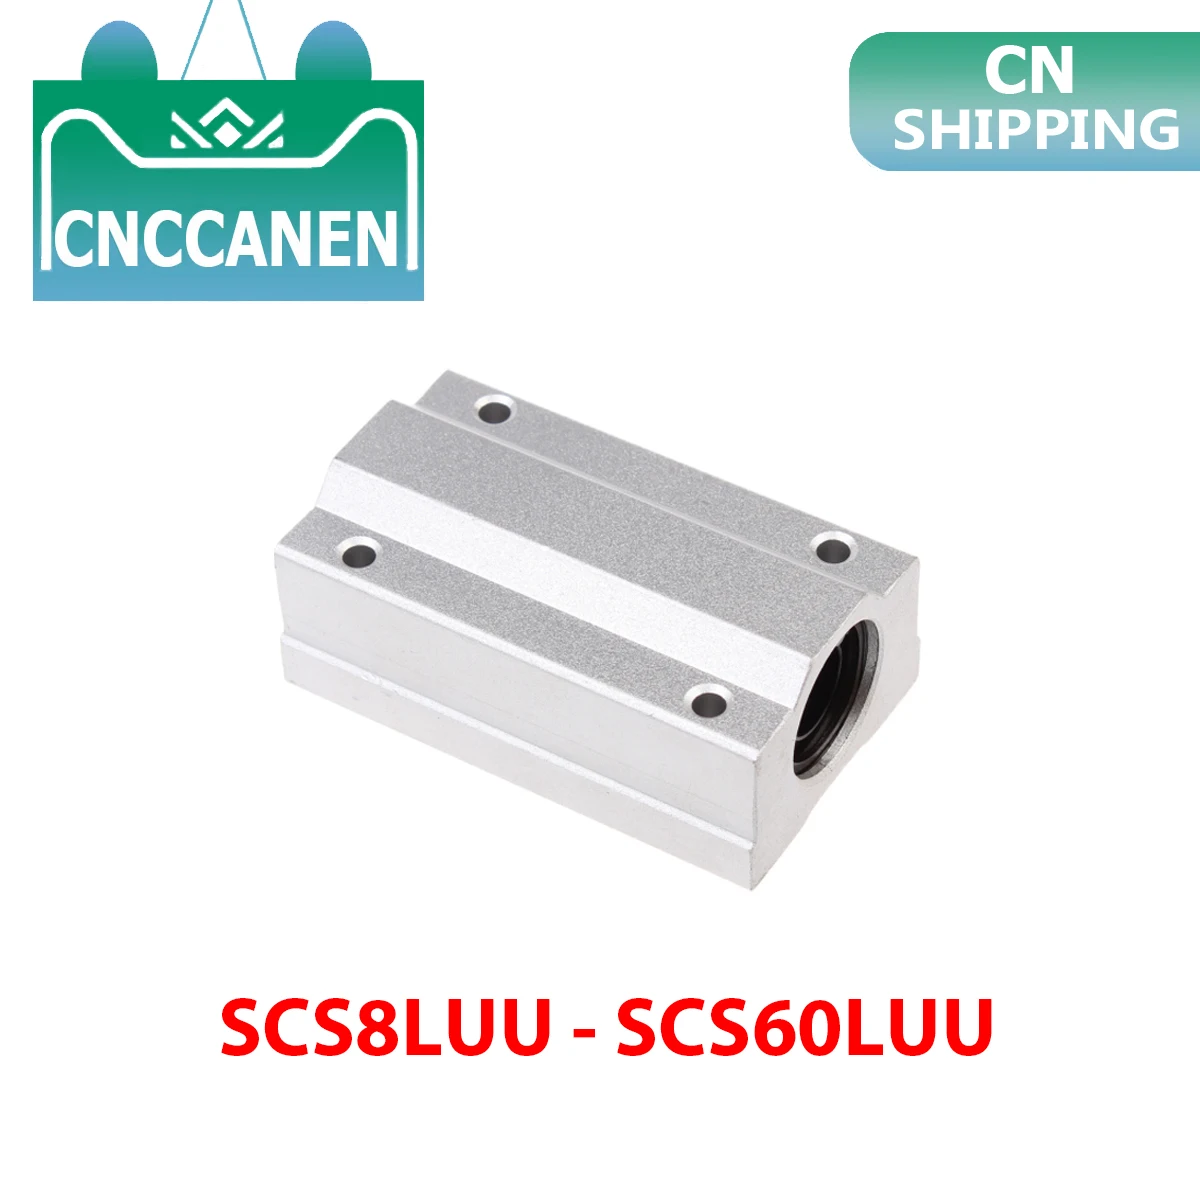 uxcell SCS25LUU Linear Ball Bearing Slide Block Units Extra Long 25mm Bore Dia 1Pcs 